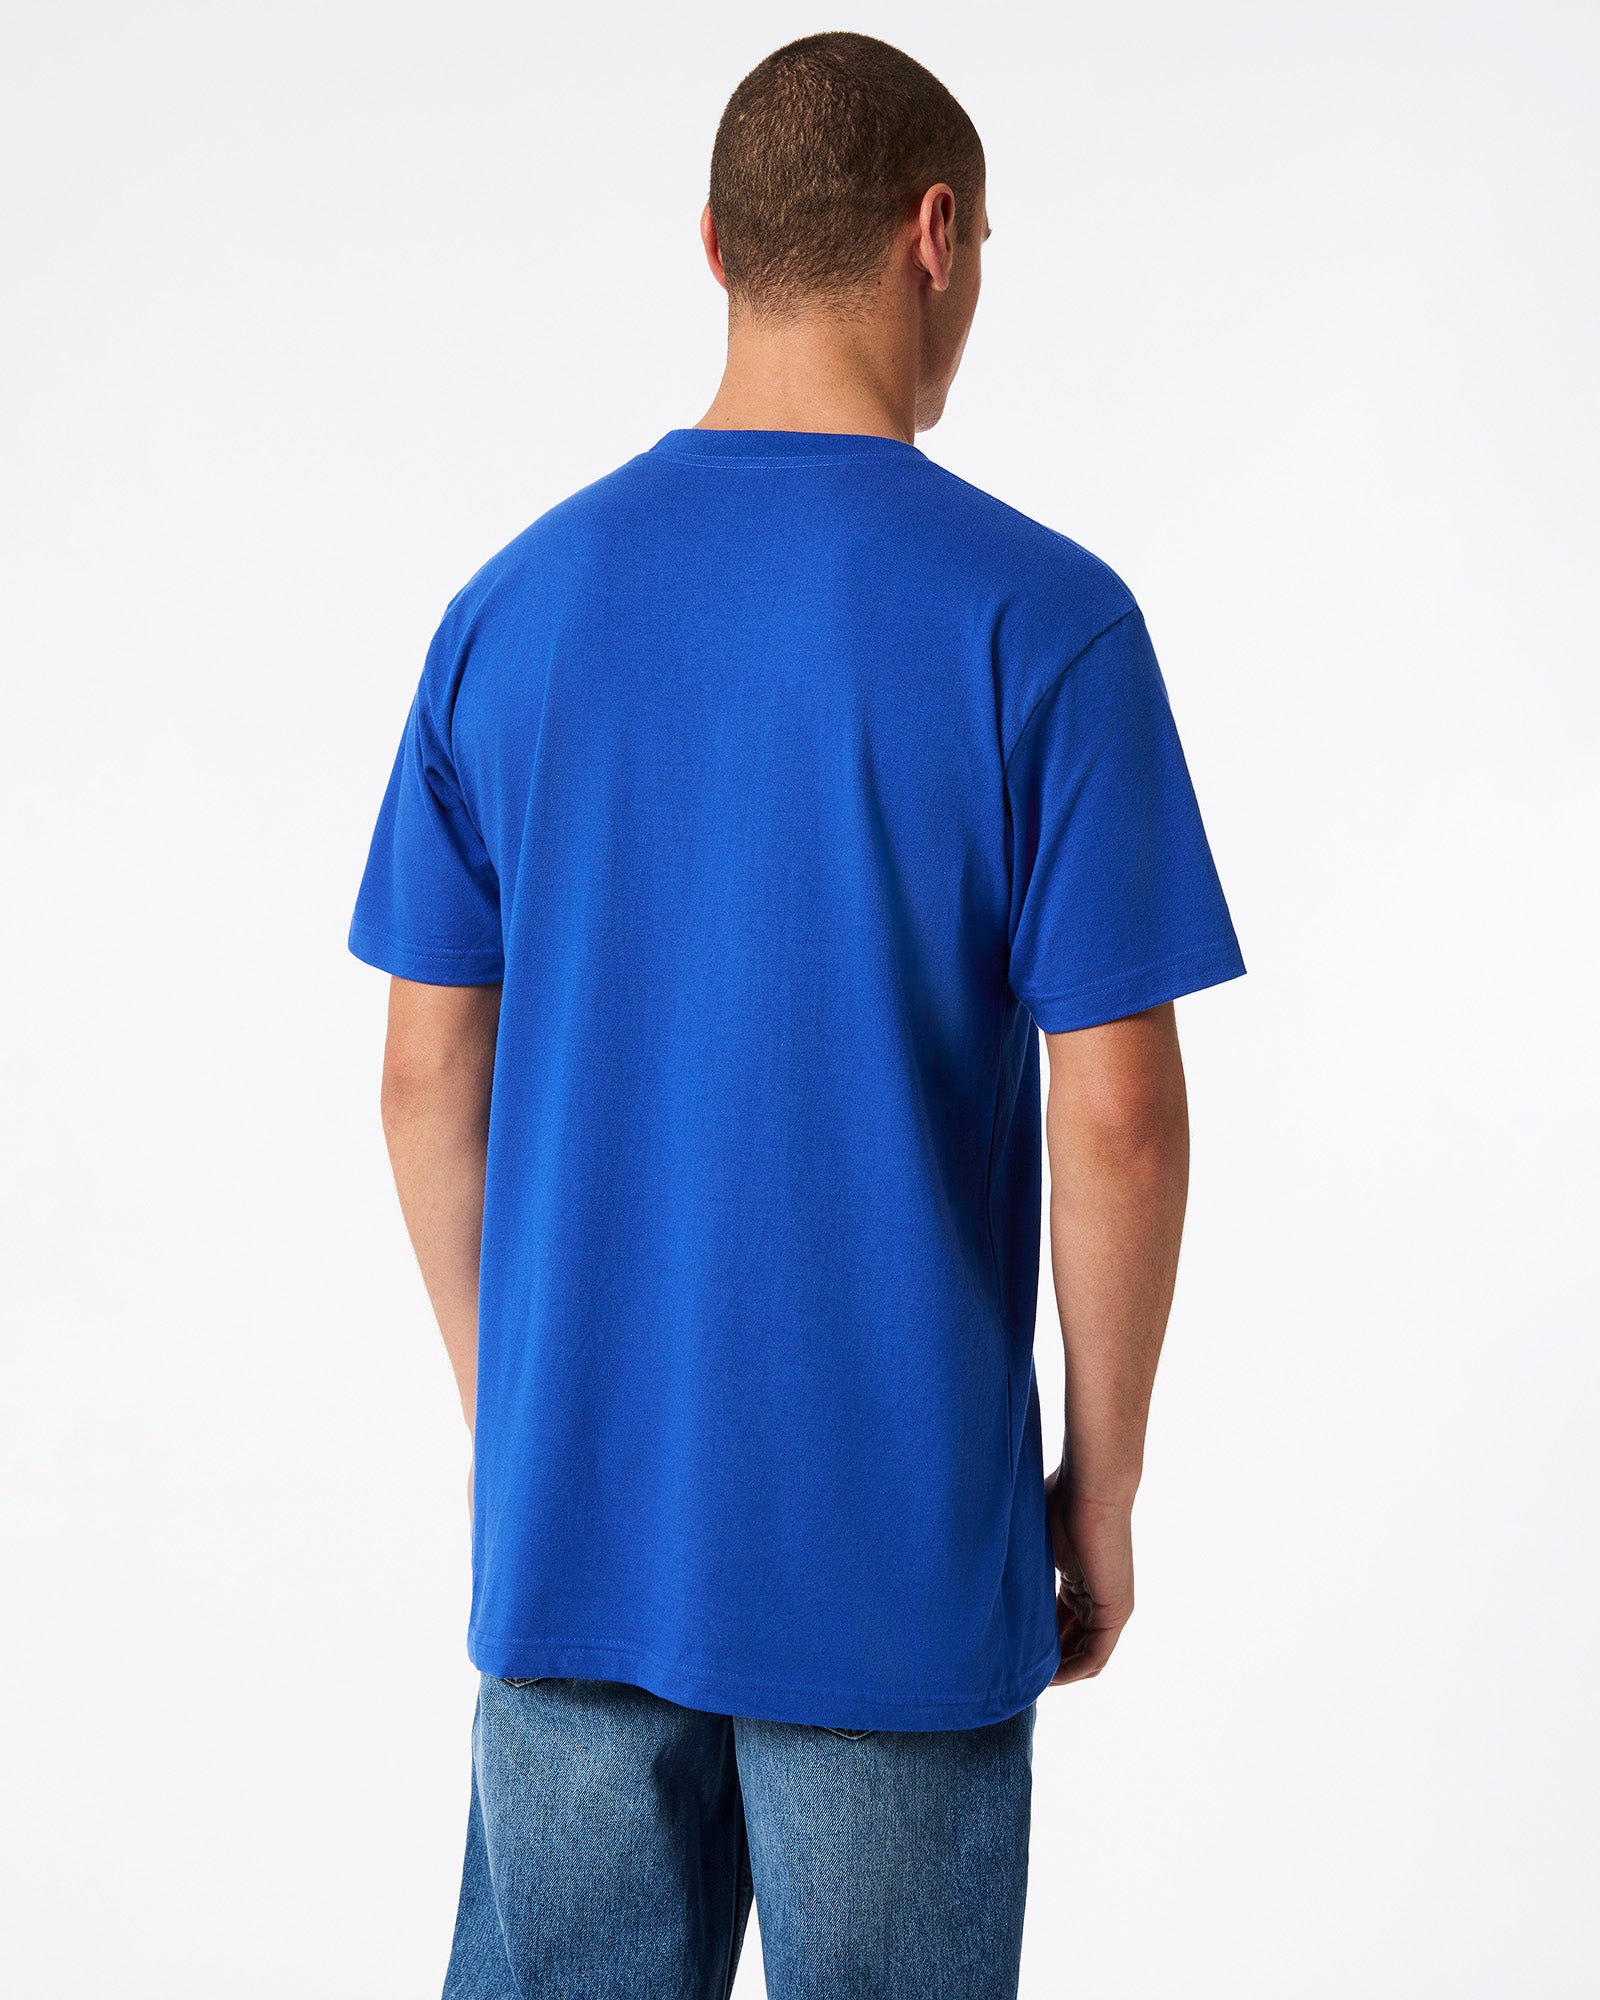 Fine Jersey Unisex Short Sleeve T-Shirt - Royal Blue